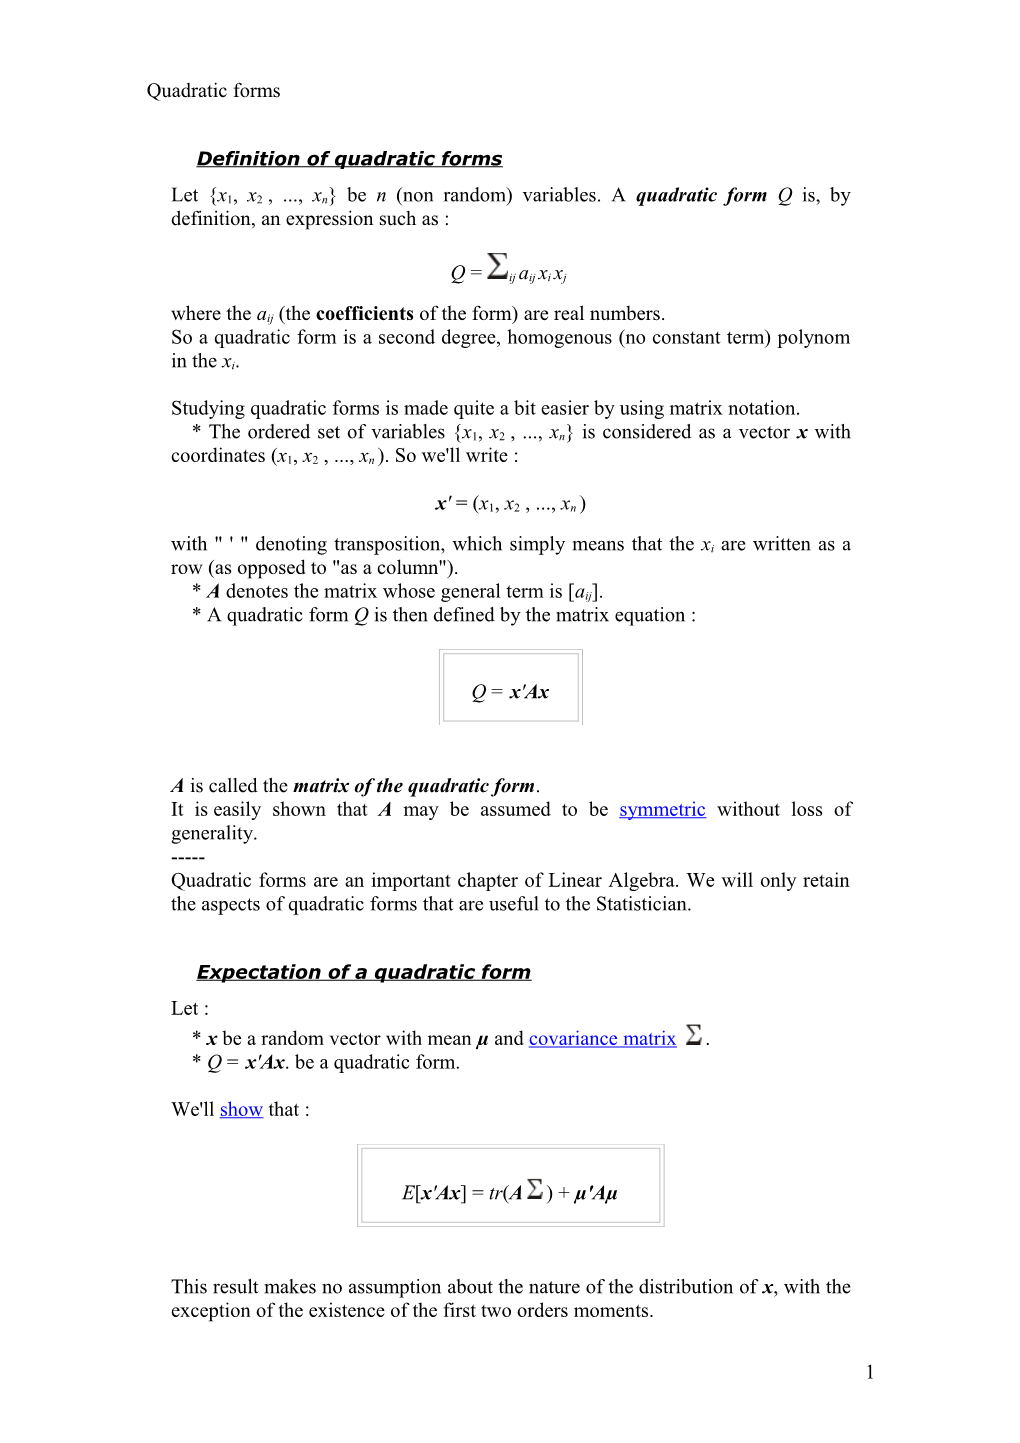 Definition of Quadratic Forms